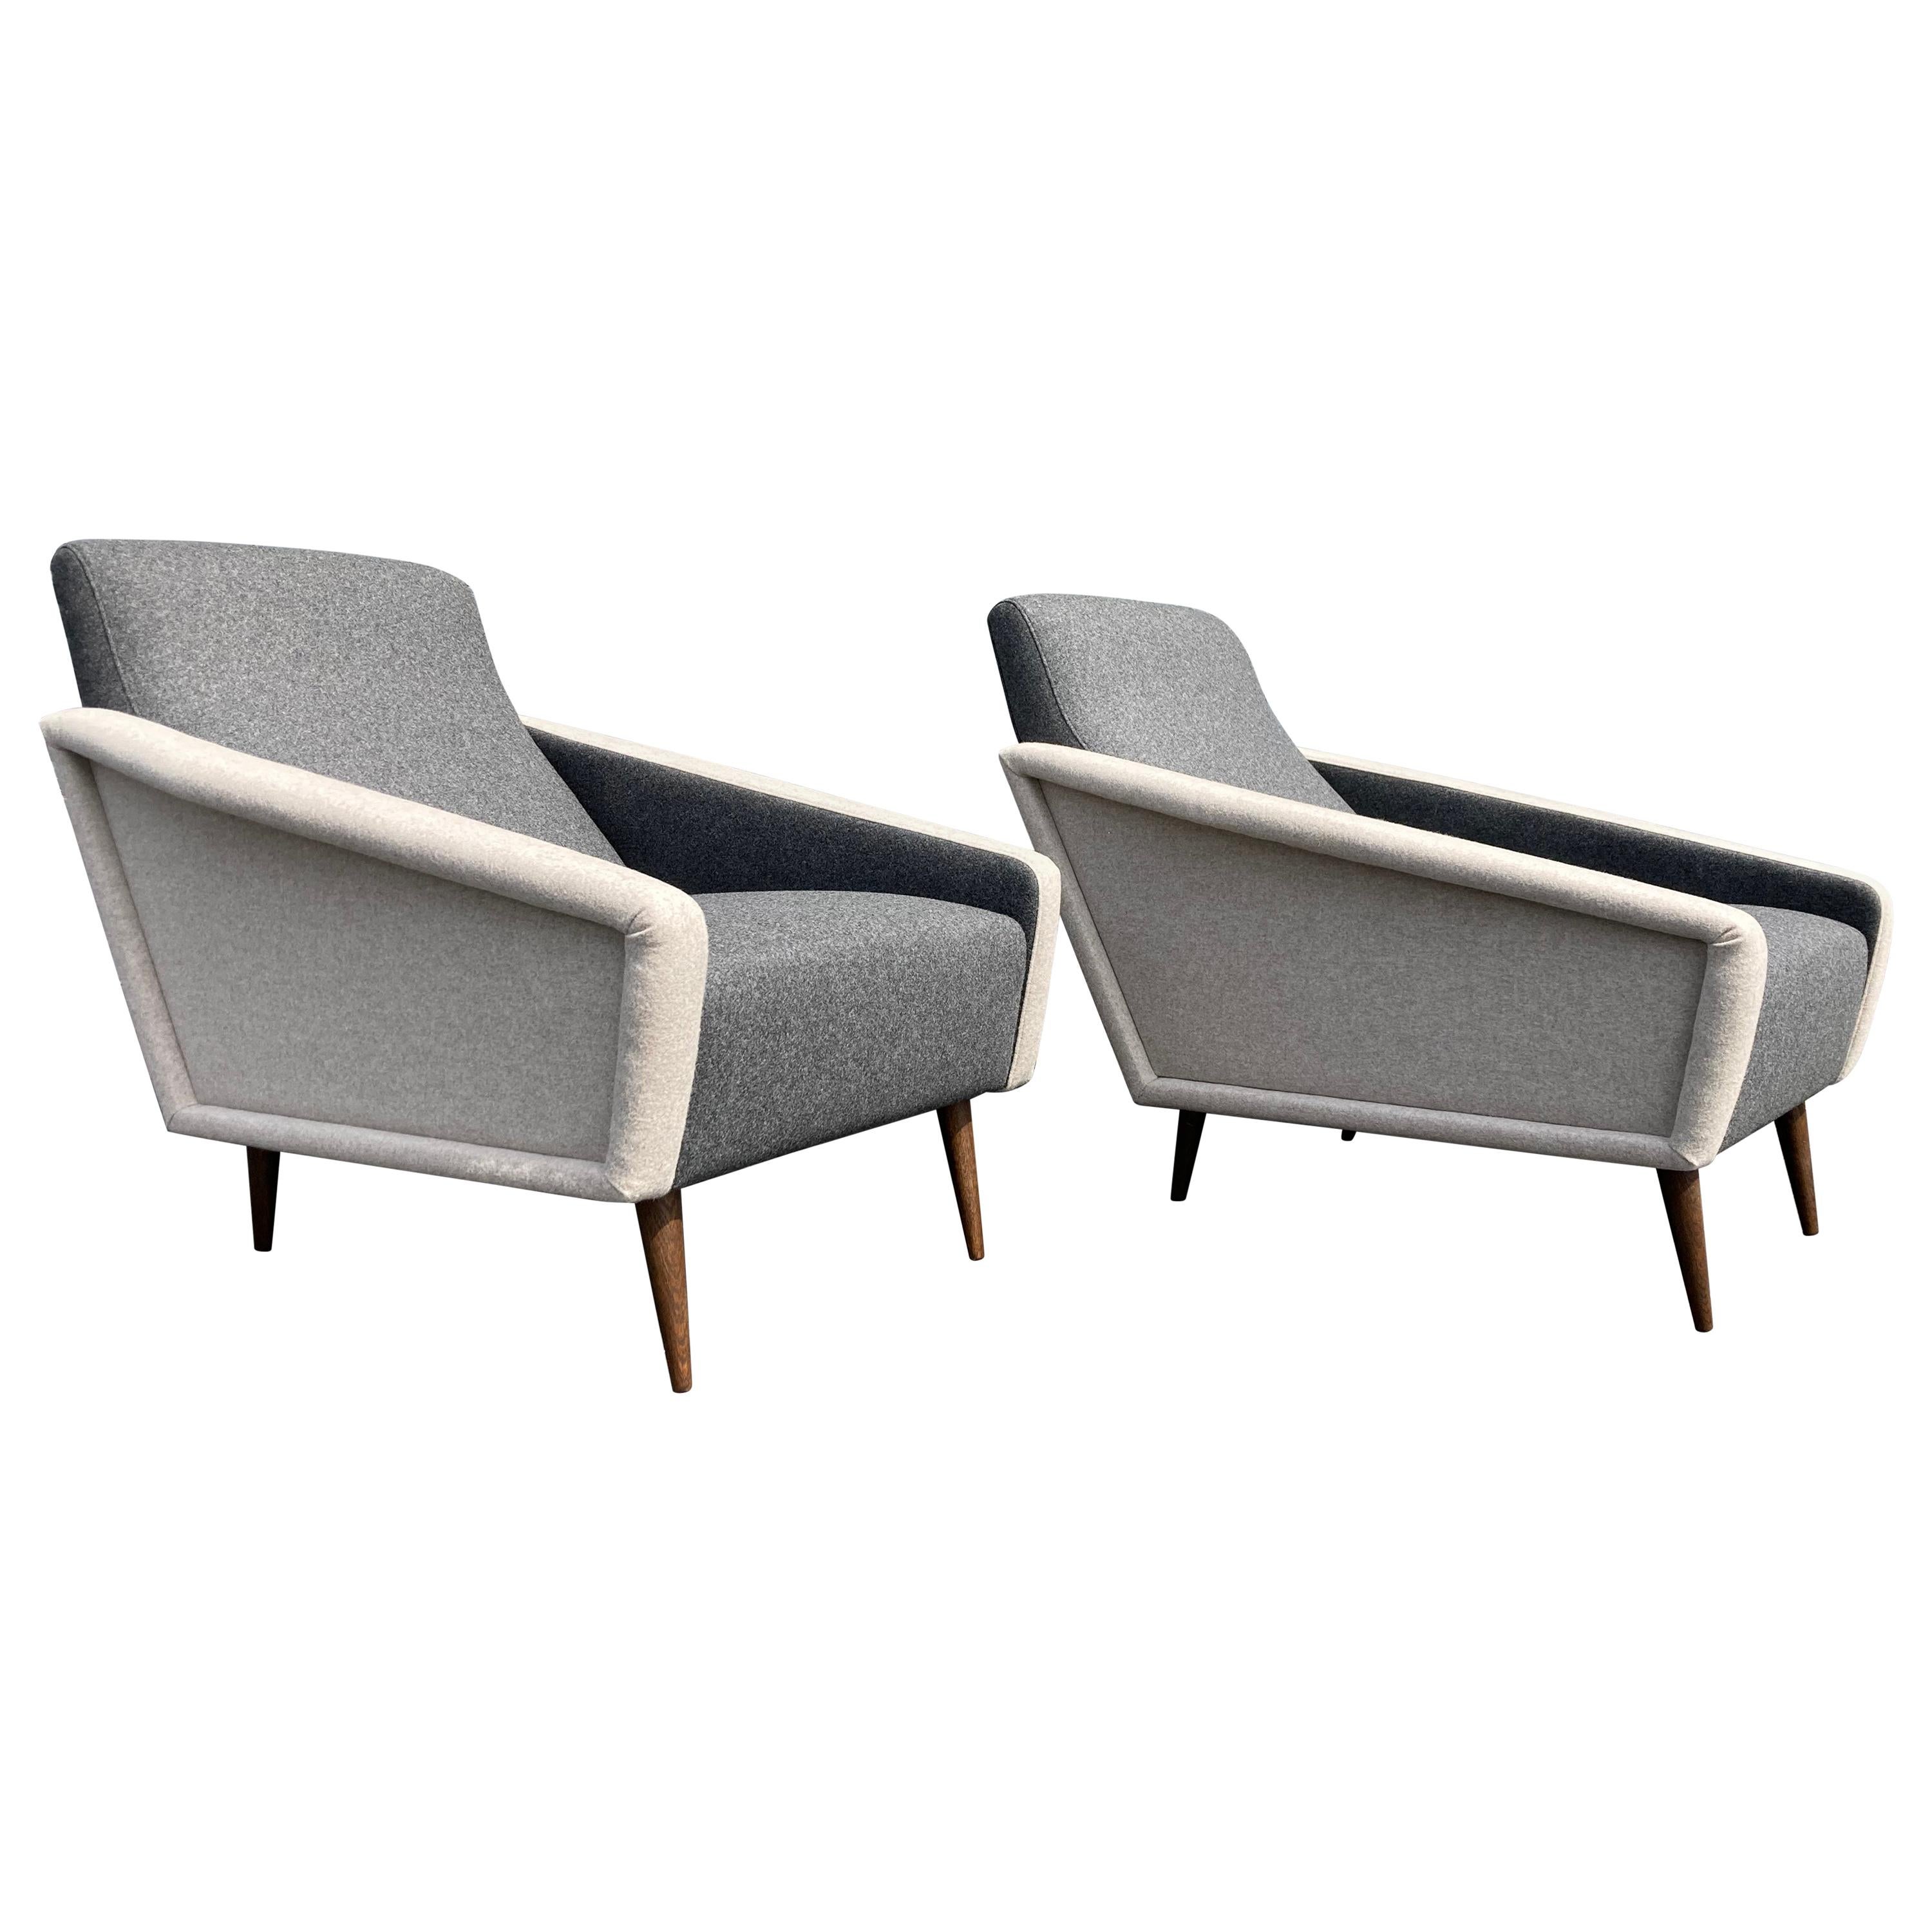 Beautiful Pair of Lounge Chairs, Kvadrat Fabric, Oak Legs, Gray